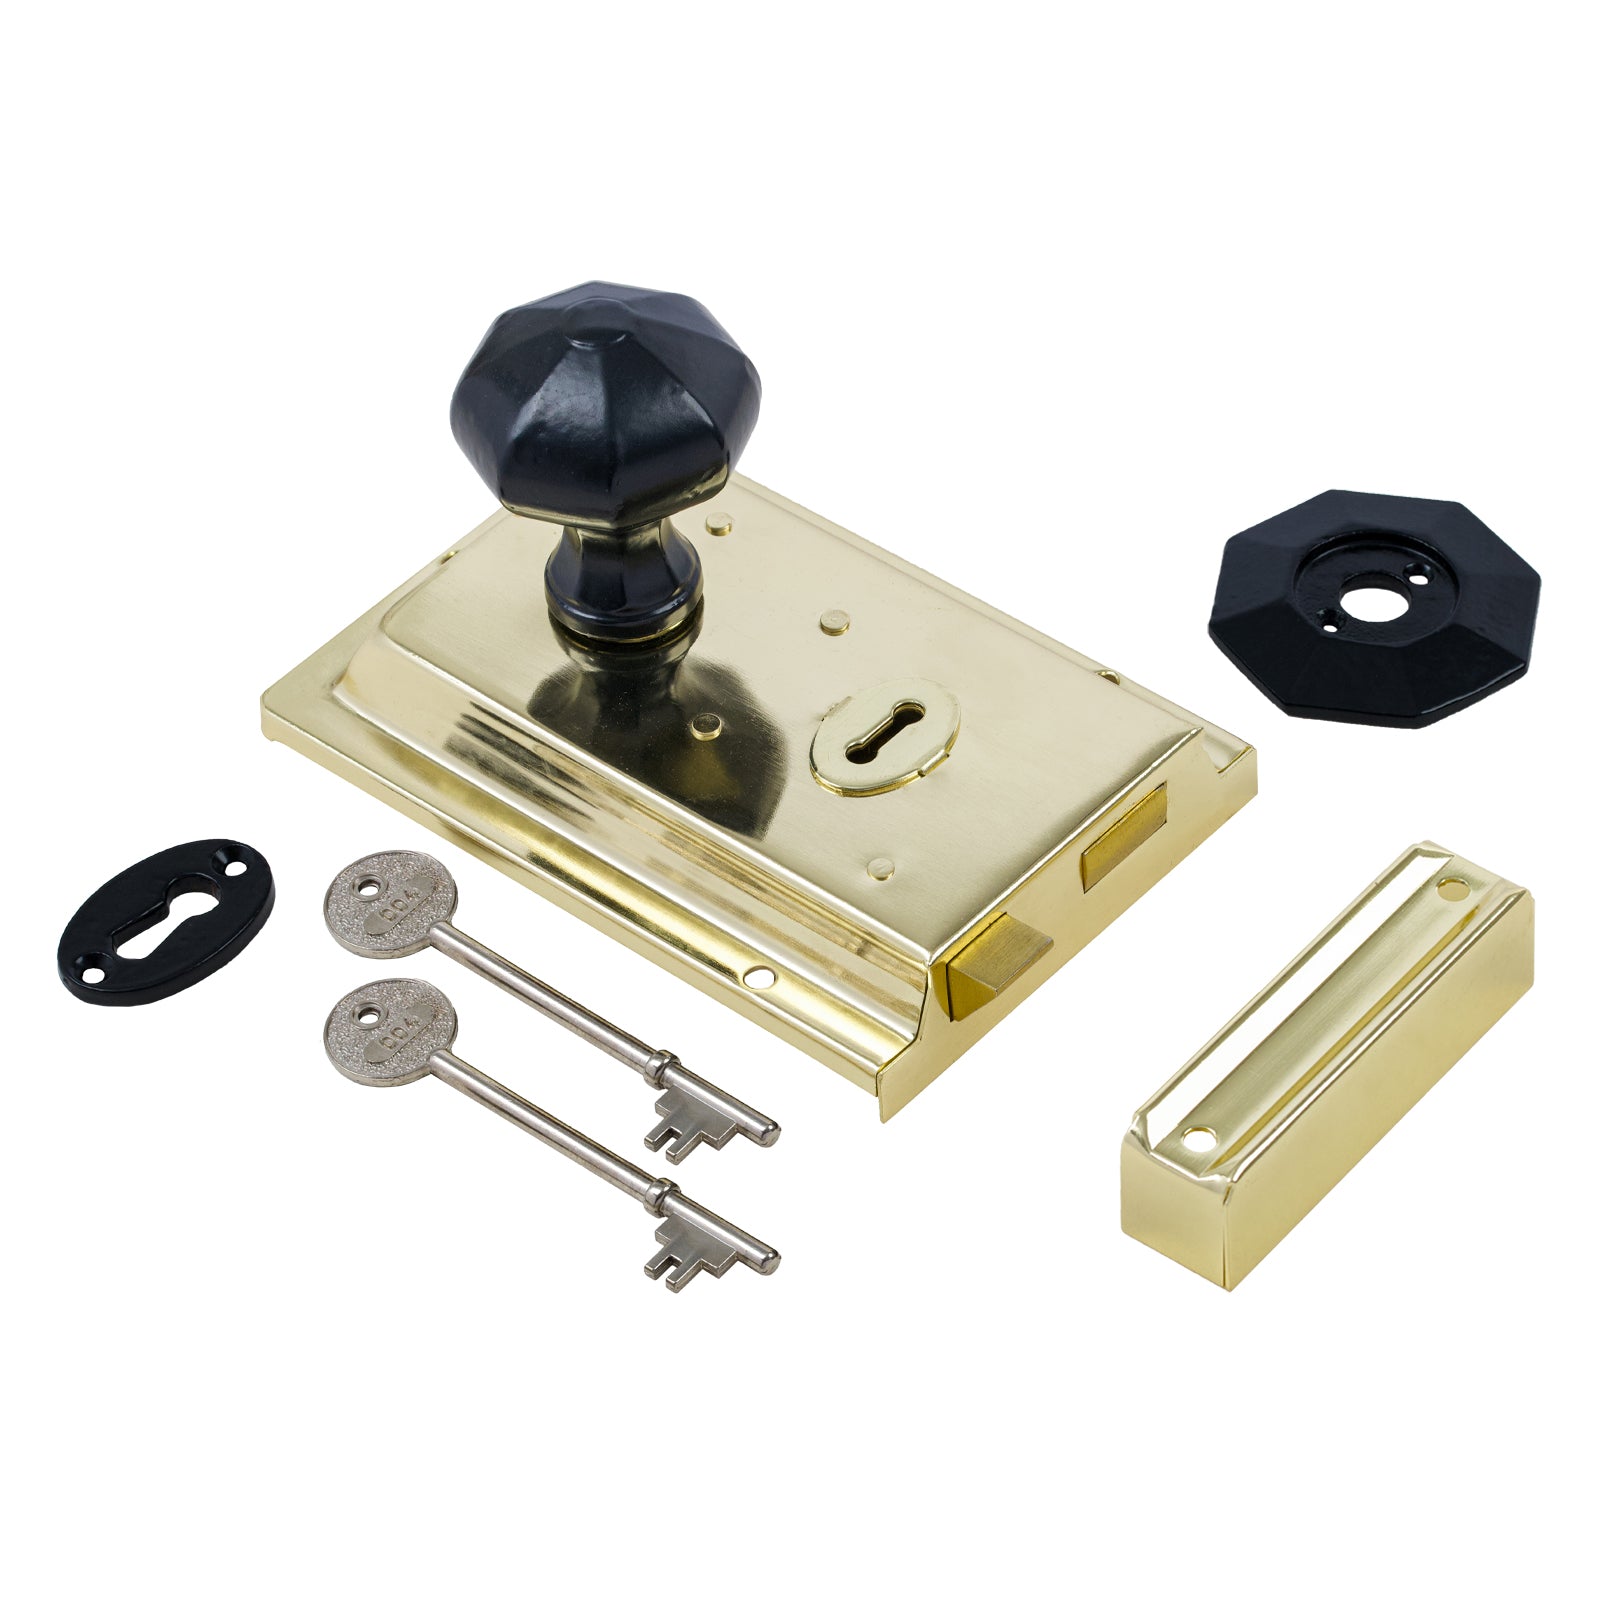 SHOW Octagonal Door Knob Set - Black On Polished Brass Rim Lock